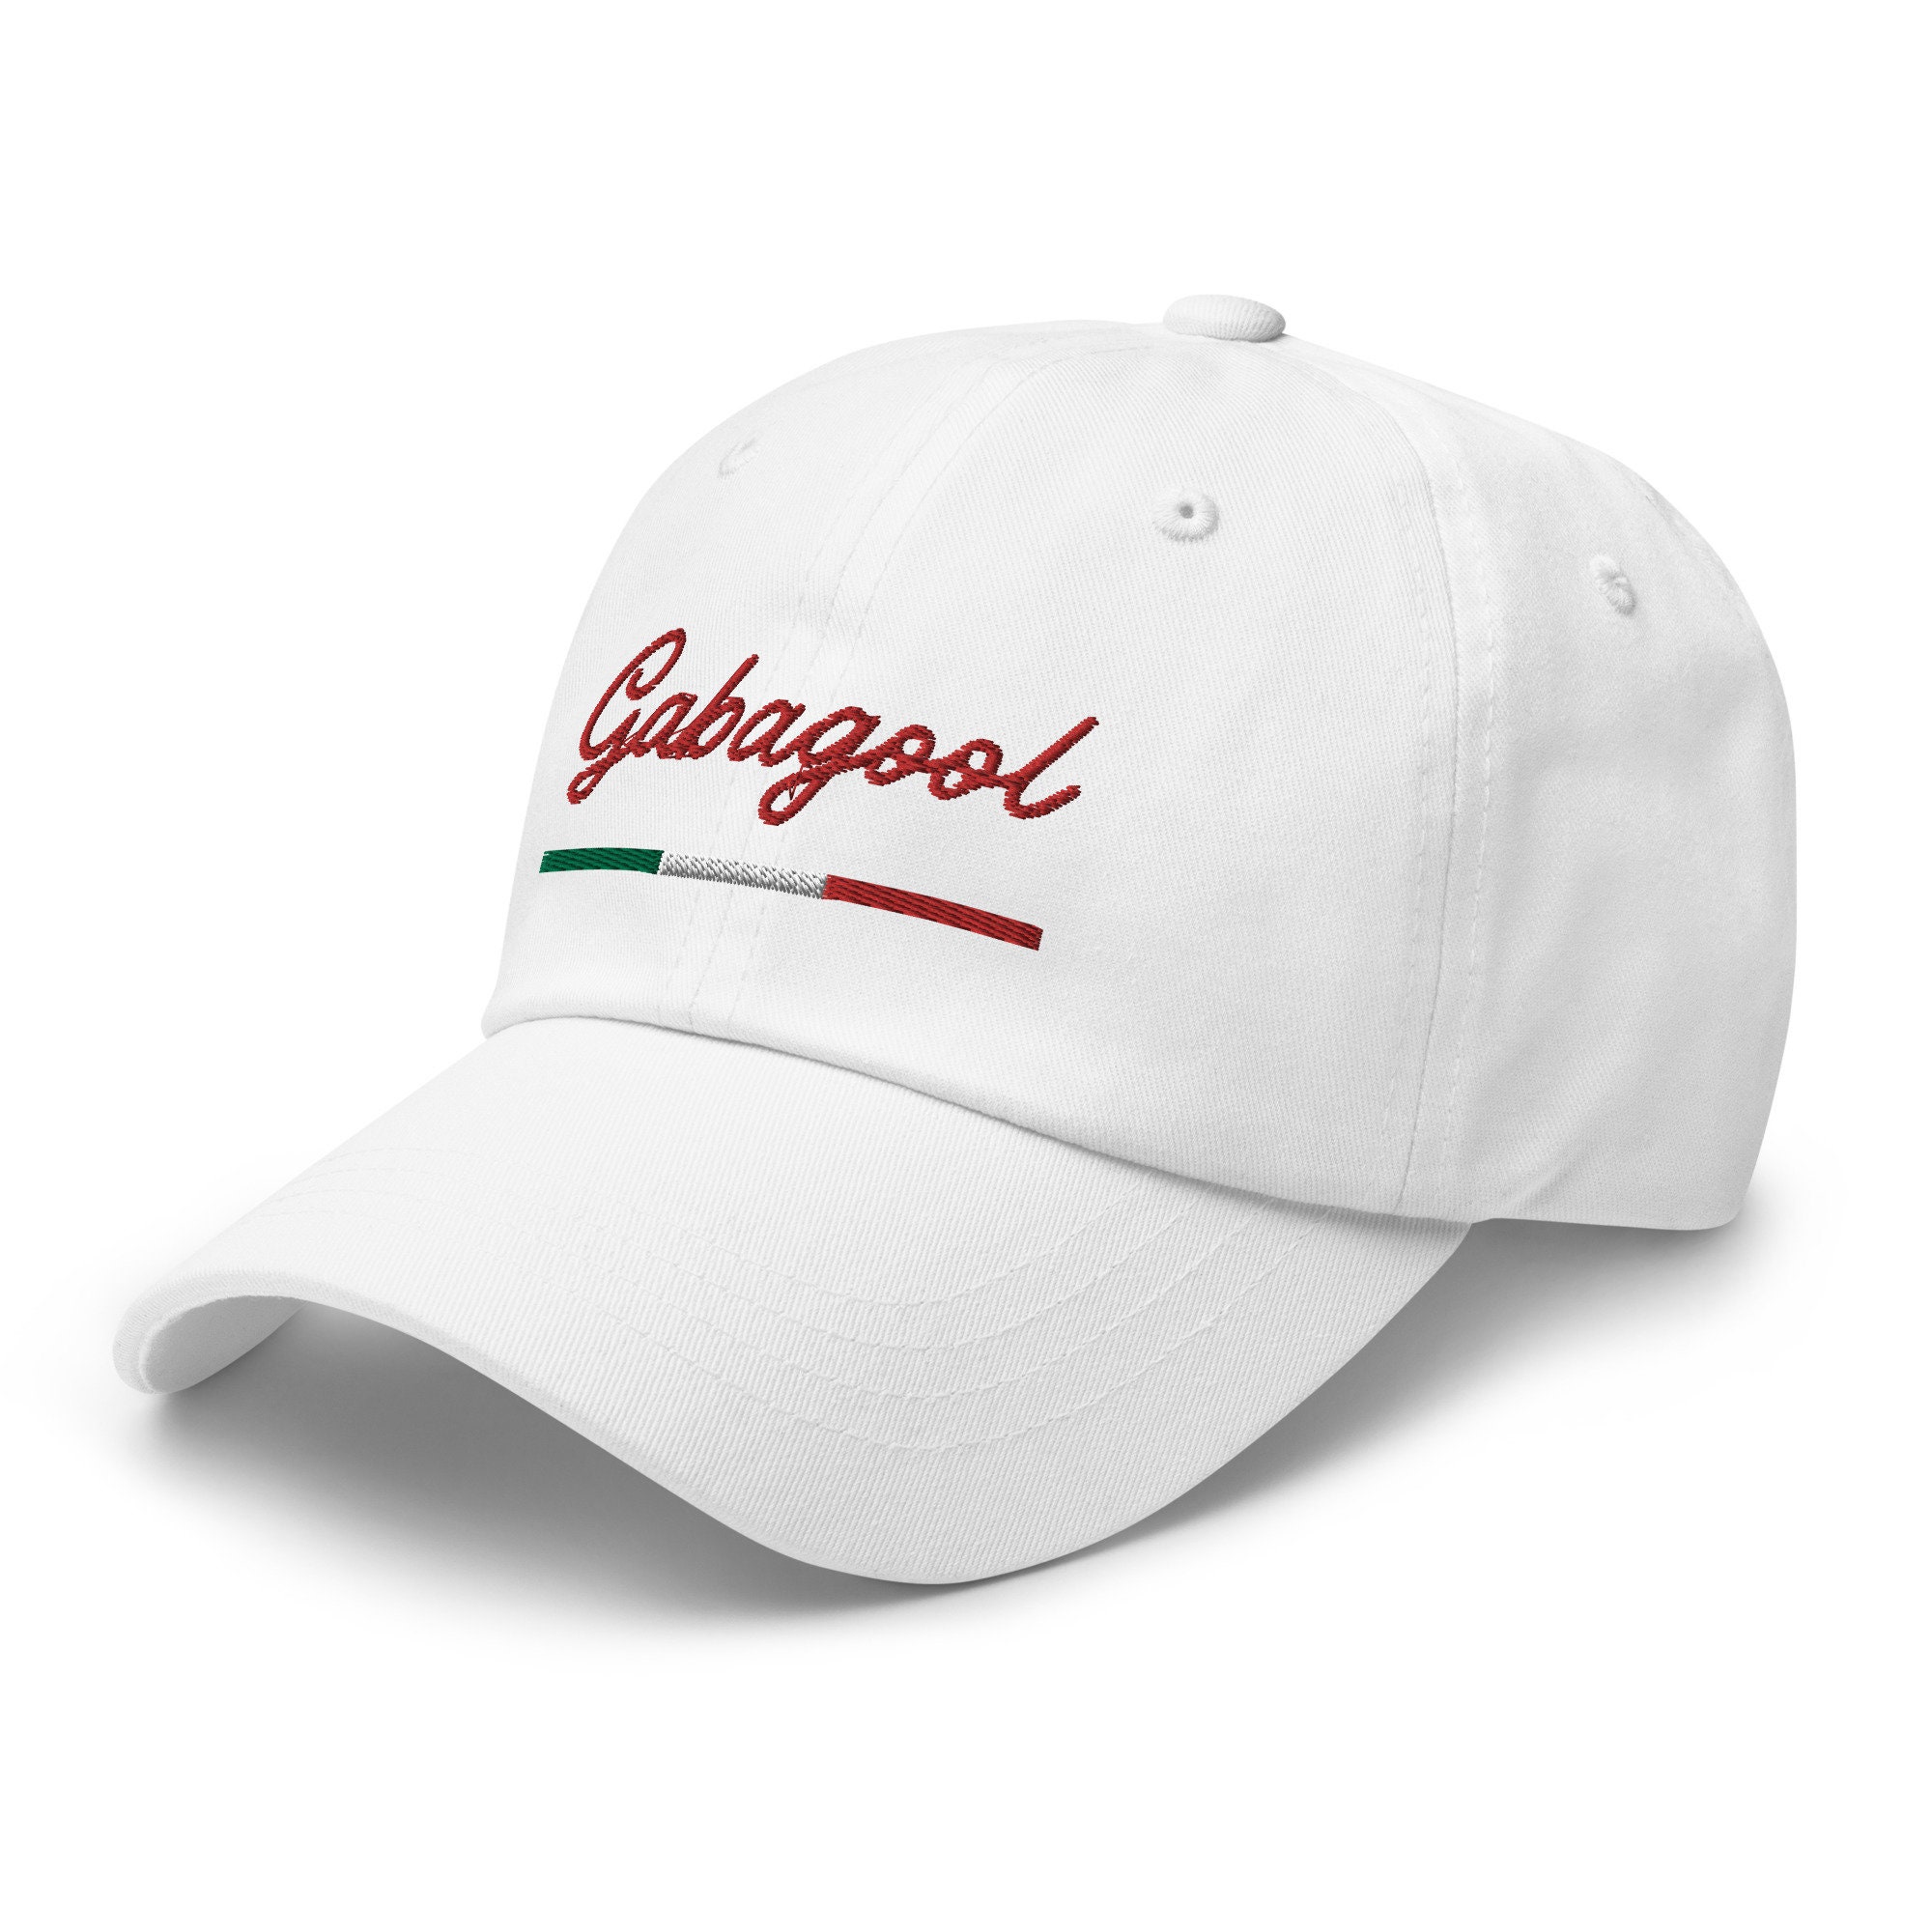 Gabagool Hat Sopranos Hat Sopranos Cap - Etsy